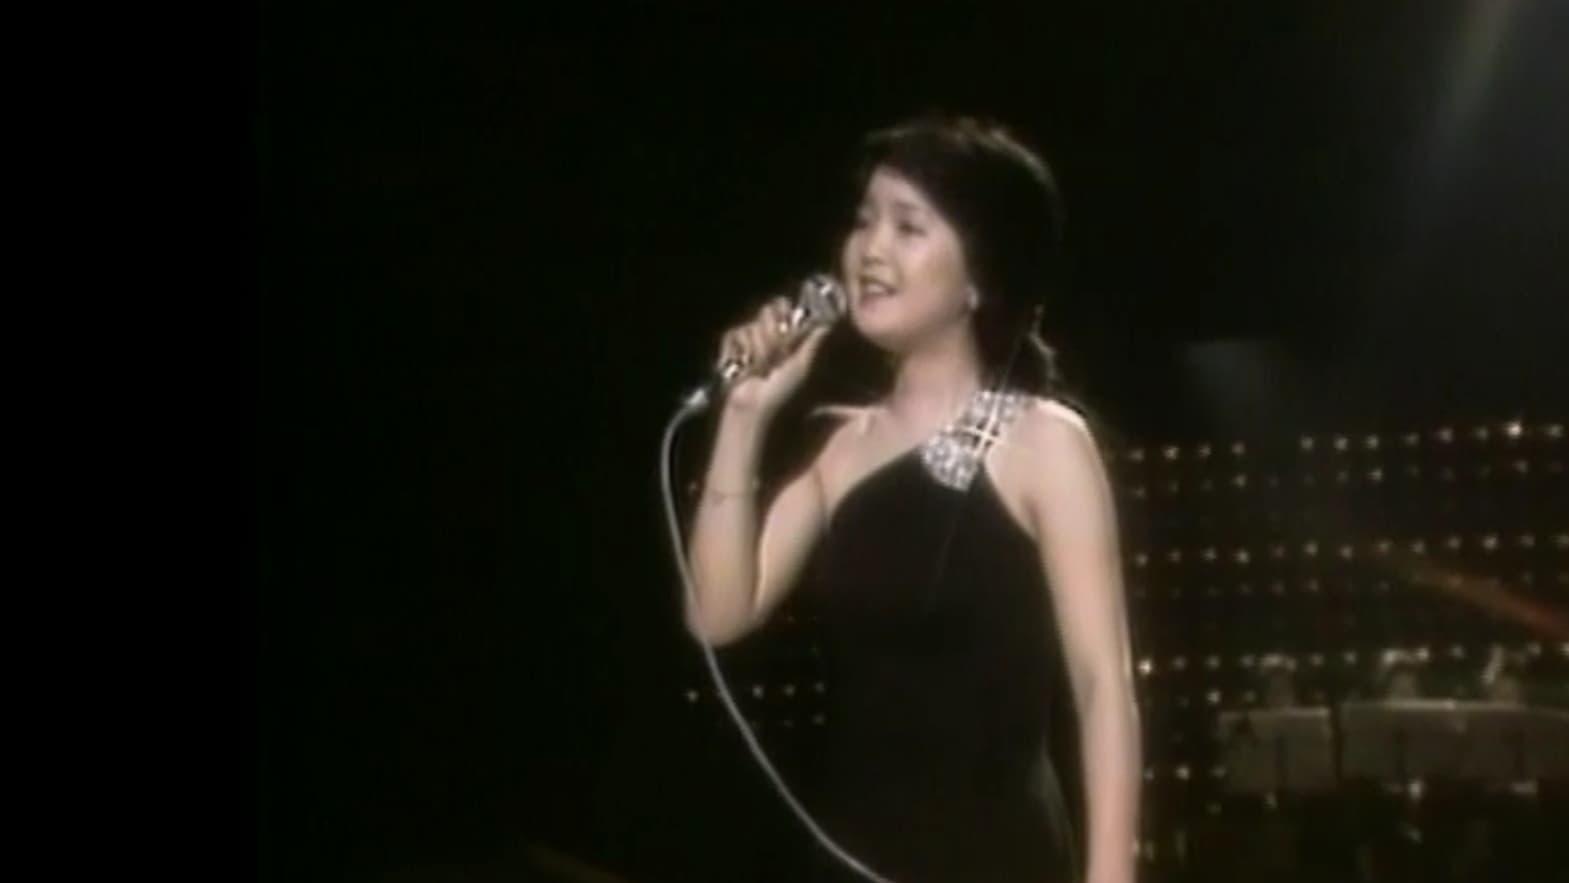 Teresa Teng — 1976 Concert in H.K. backdrop